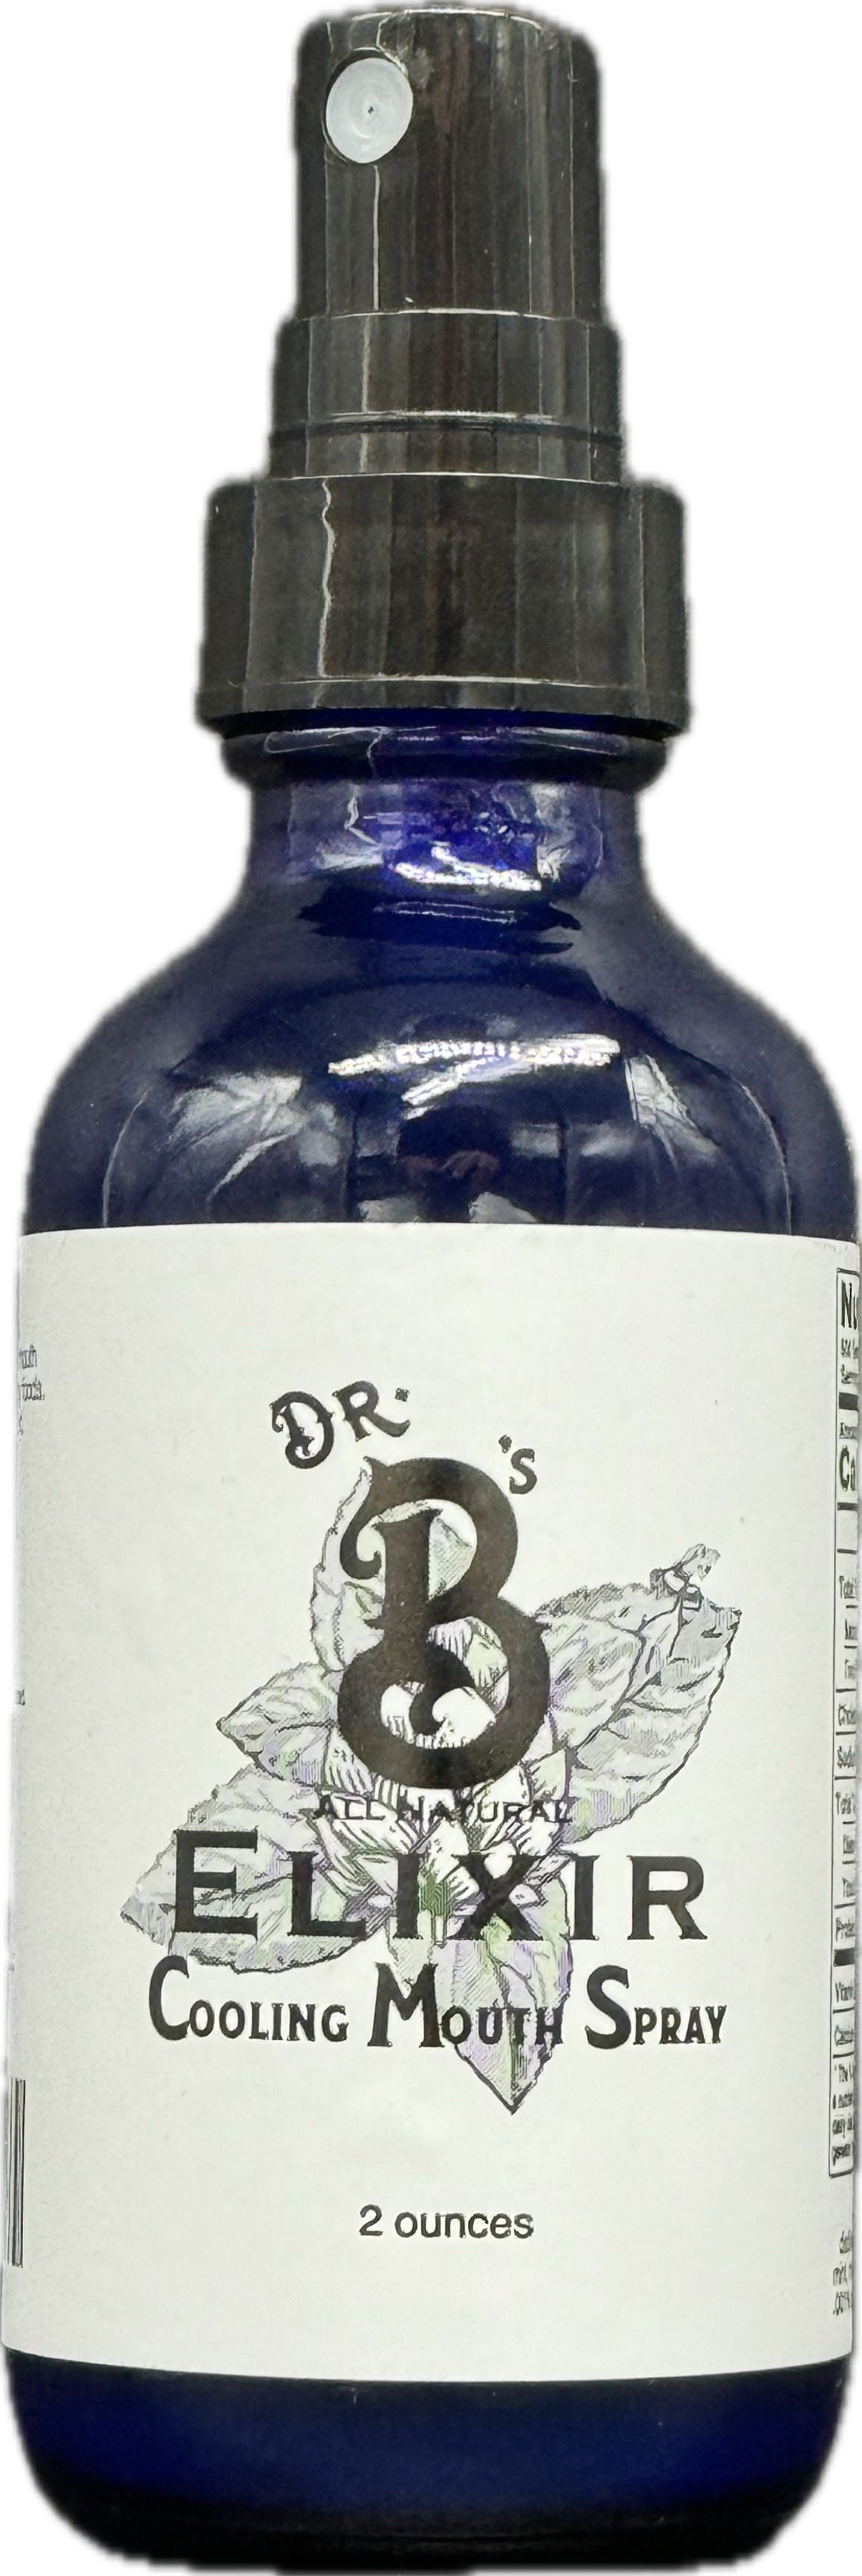 Dr. B's Elixir - Cooling Mouth Spray - 2 oz